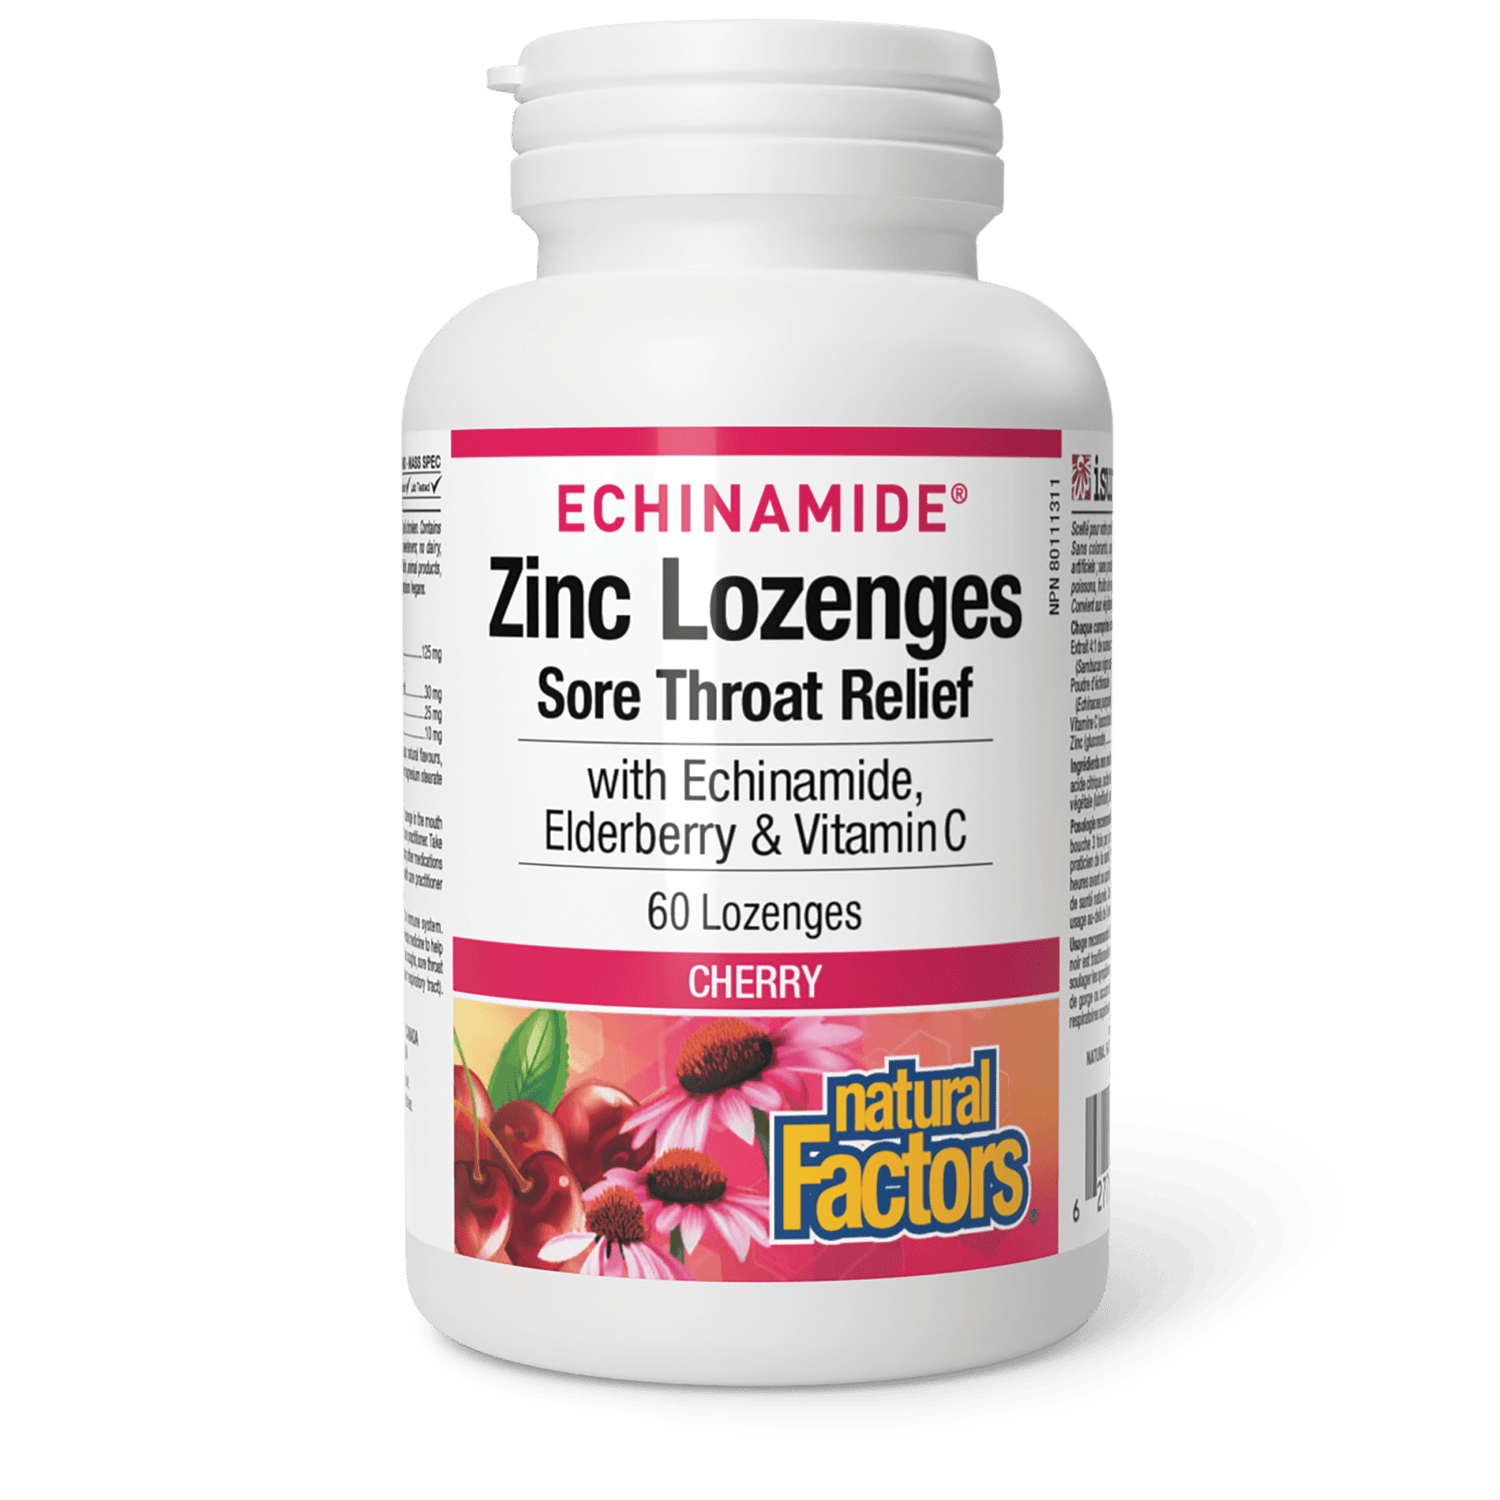 Zinc Lozenges with Echinamide, Elderberry & Vitamin C, Cherry, ECHINAMIDE, Natural Factors|v|image|1689